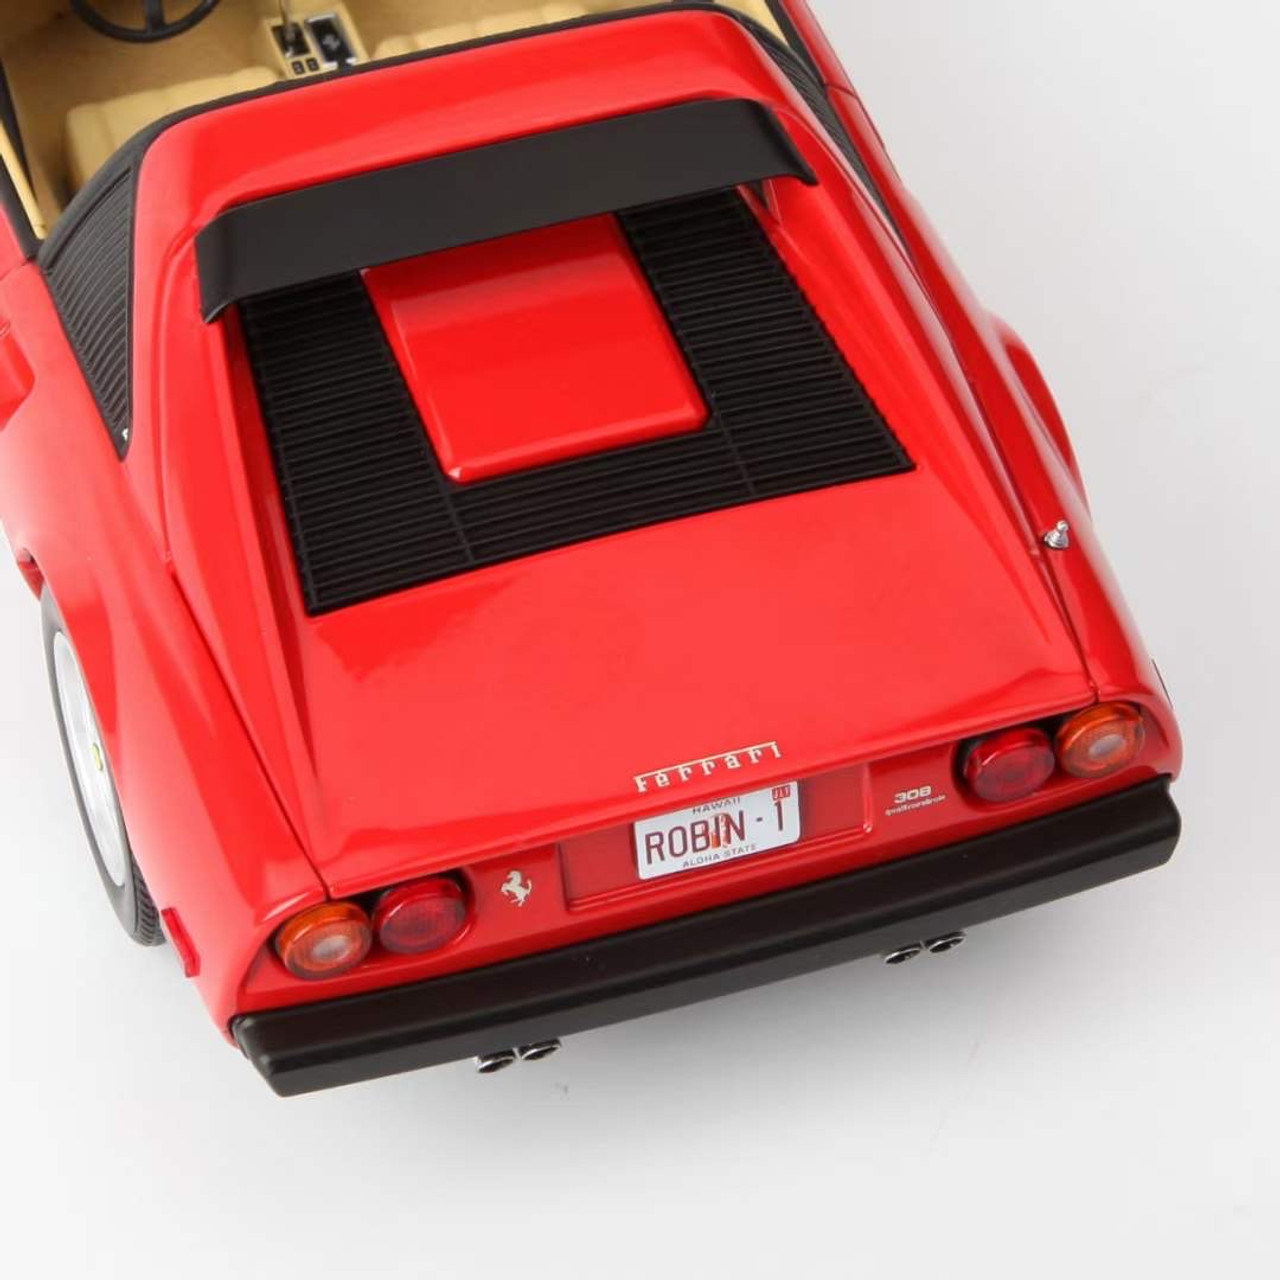 1/18 Norev 1982 Ferrari 308 GTS (Red) Diecast Car Model